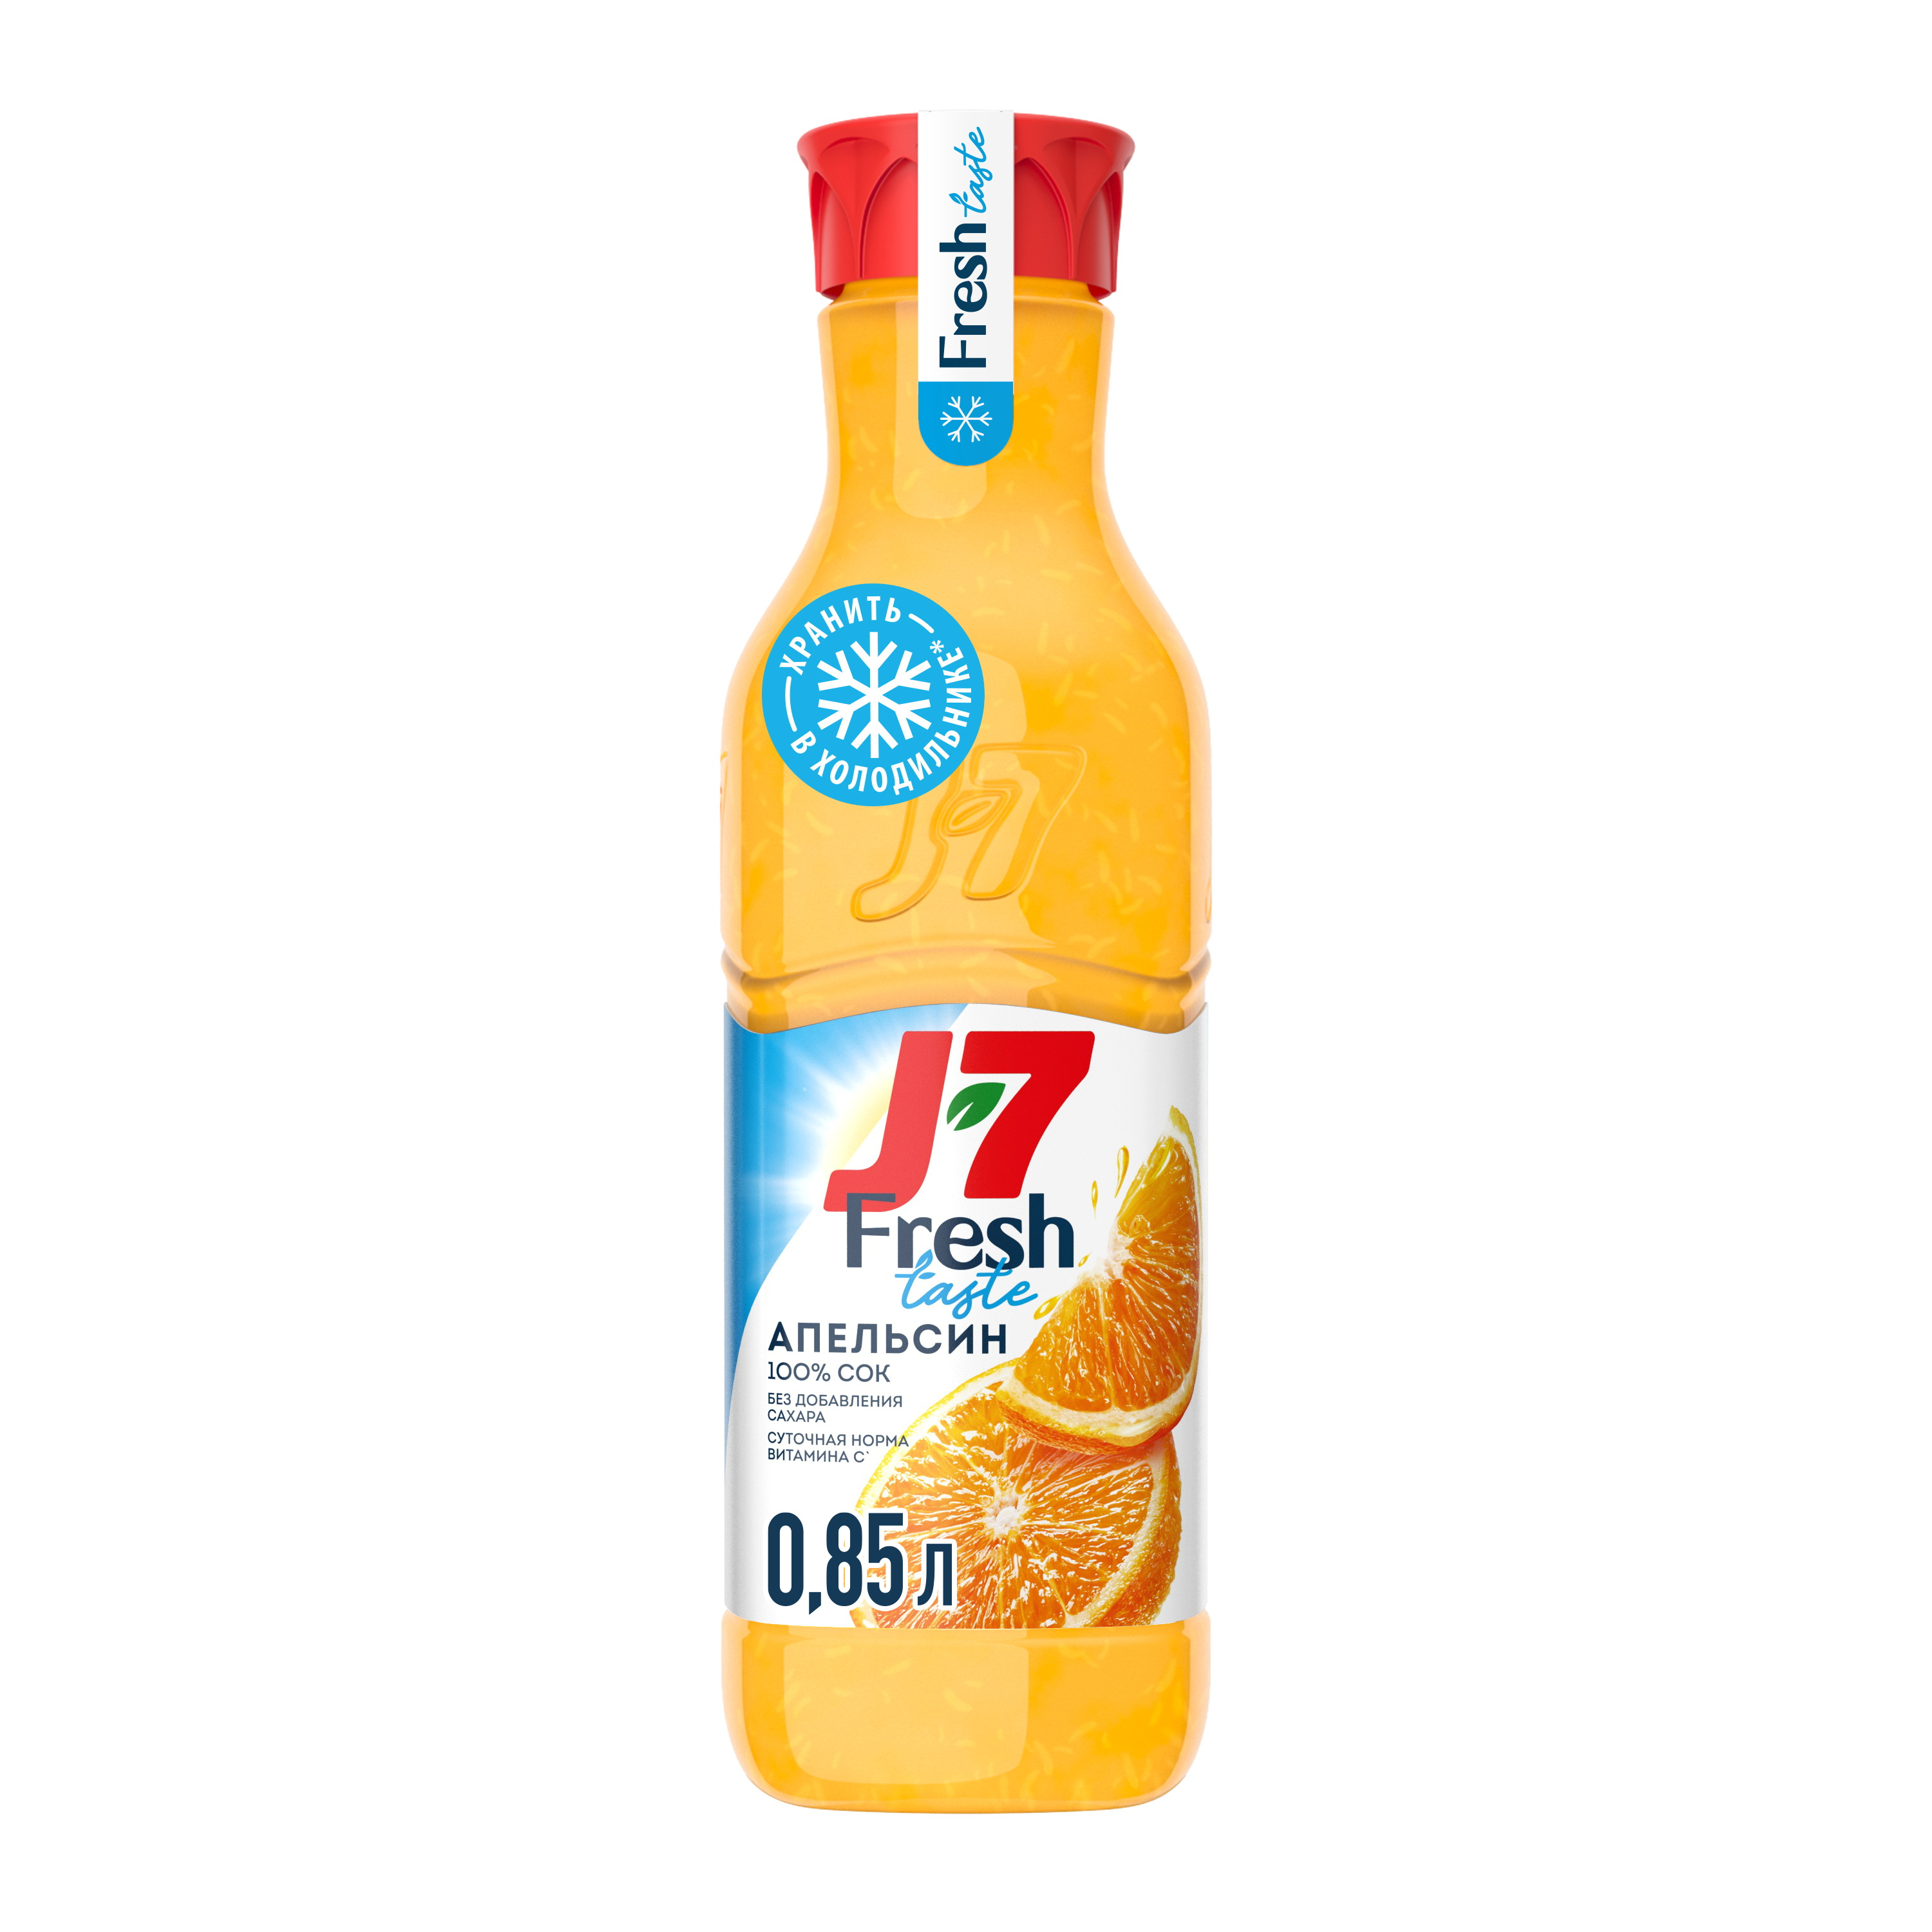 J7 fresh. Сок j7 Fresh taste апельсин. J7 Fresh taste апельсин. Сок j7 апельсин Фреш 0,85л. J7 Fresh taste сок апельсин с мякотью 0,85л.